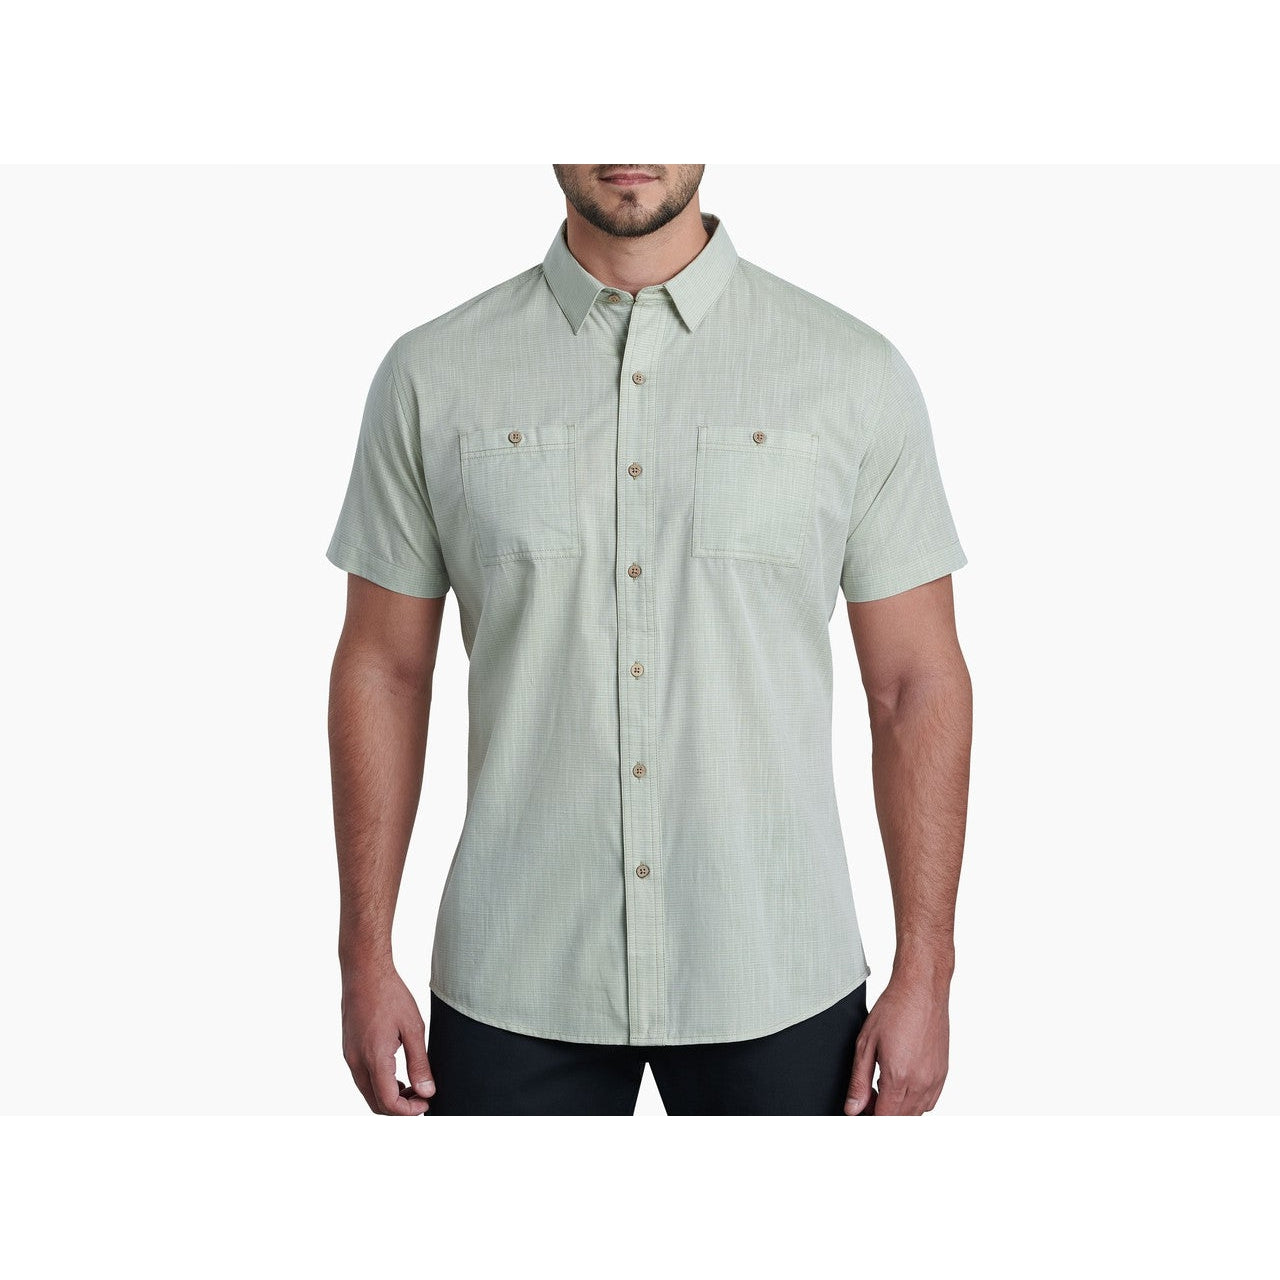 Kuhl Karib Stripe S/S Shirt-MENS CLOTHING-ALOE-S-Kevin's Fine Outdoor Gear & Apparel